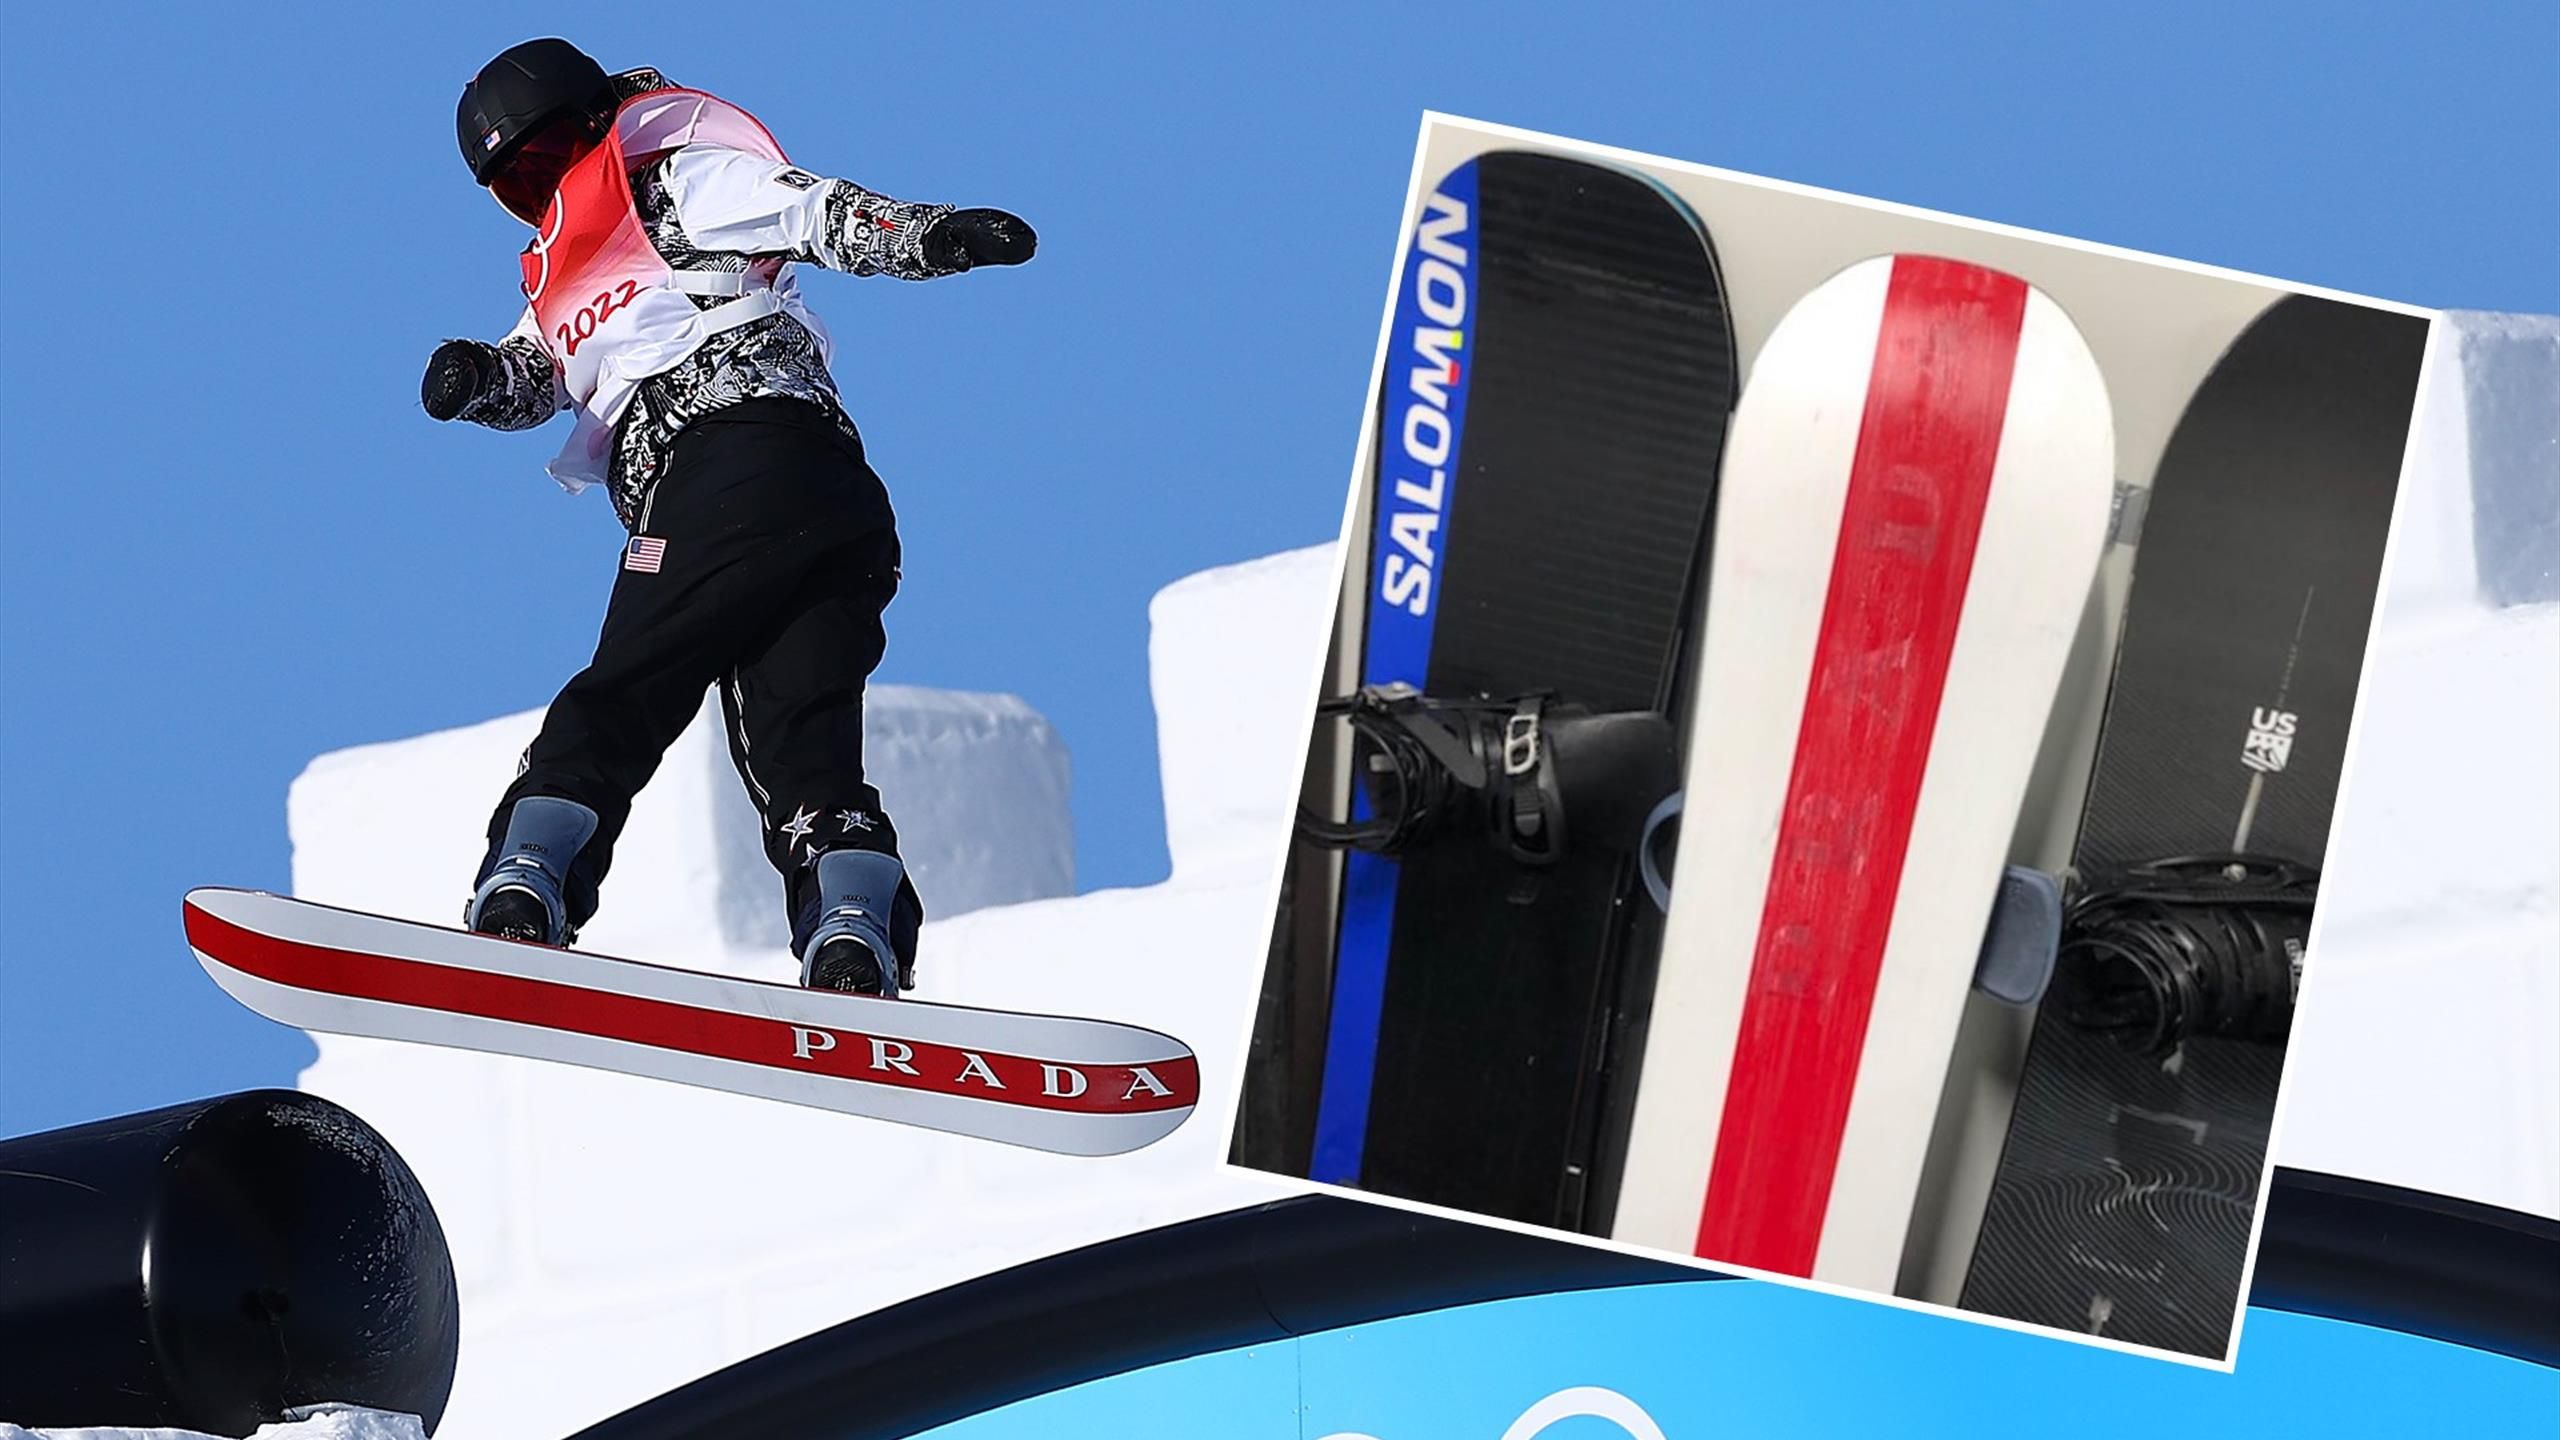 PRADA on X: The slopes are no match for snowboarder Julia Marino